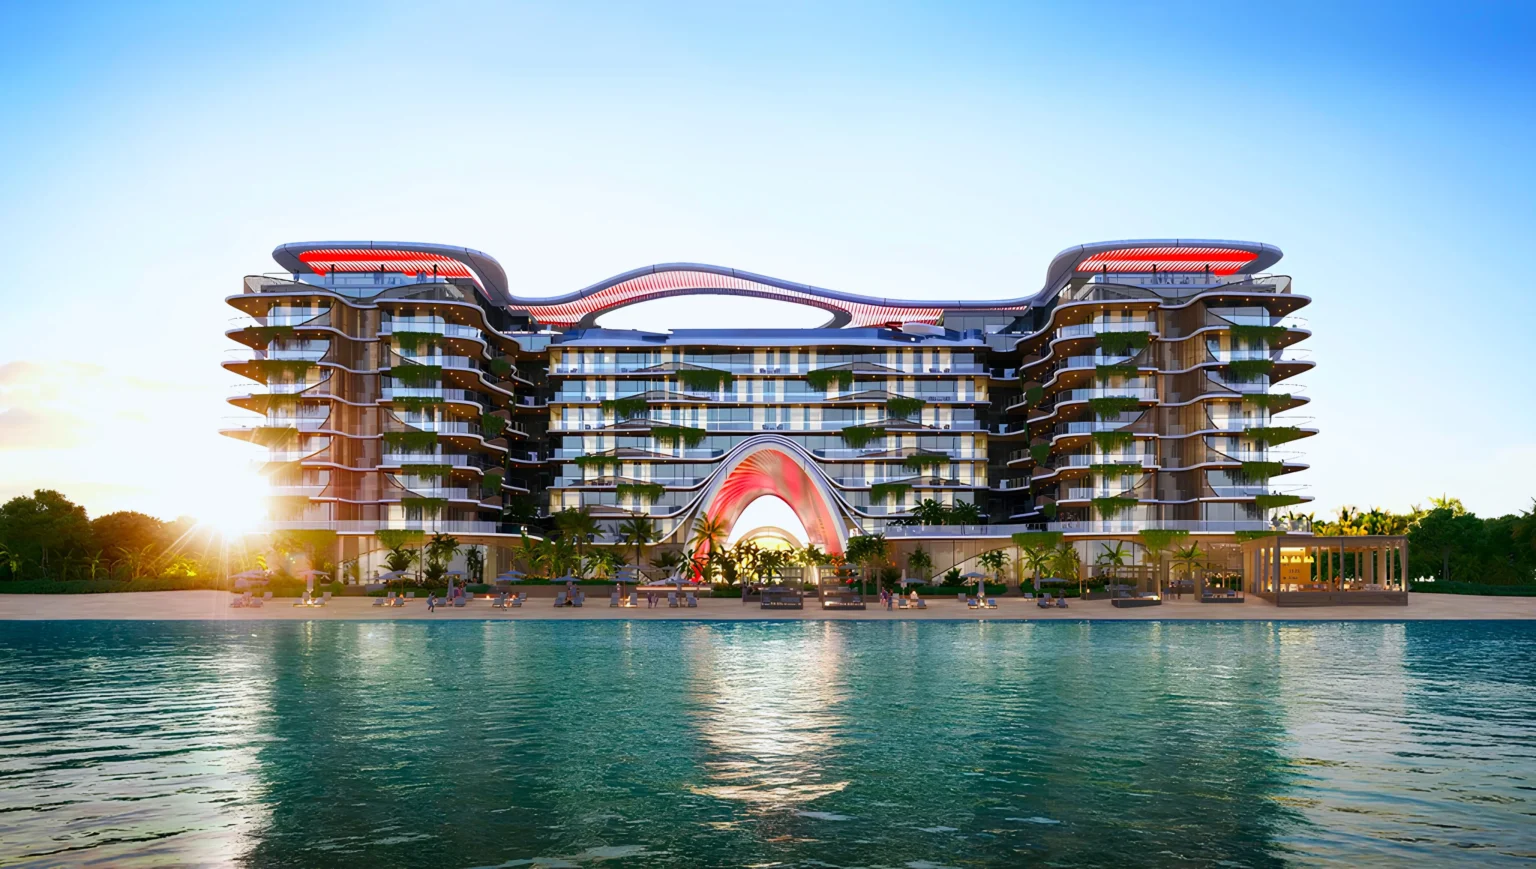 The Unexpected Al Marjan Island Hotel & Residence by Almal, RAK